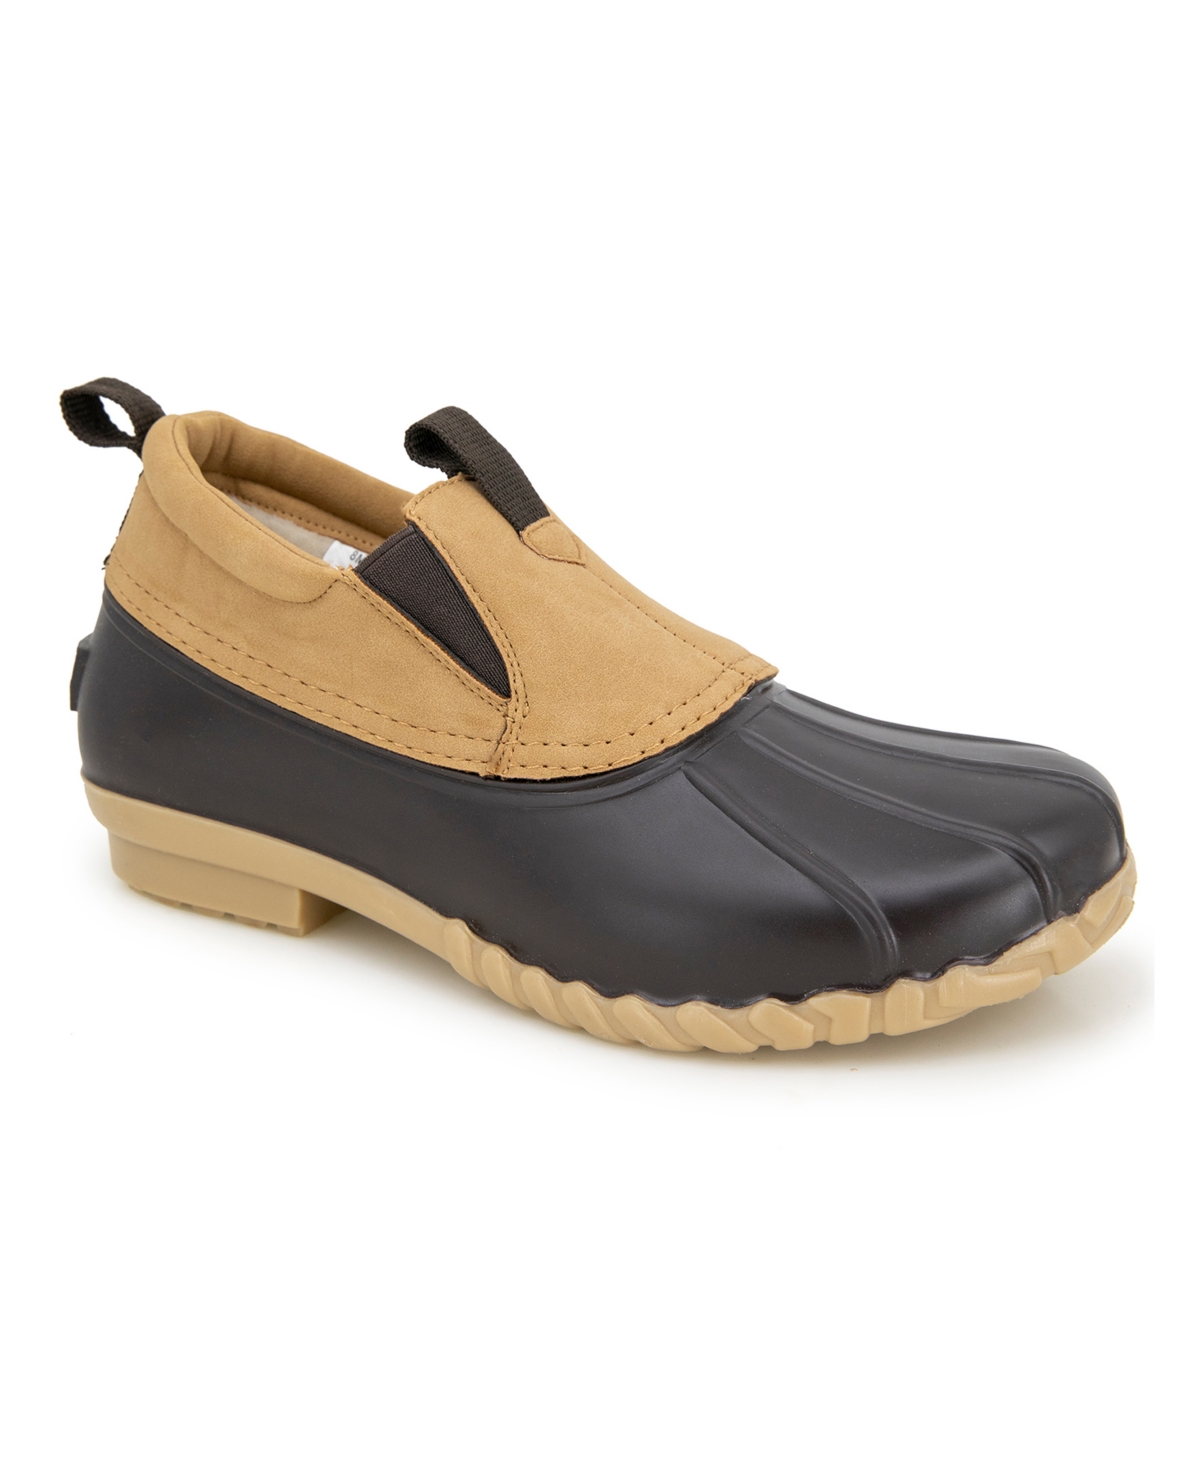 Men's Water Resistant Marsh Chelsea Duck Shoes - Dark Brown, Brown